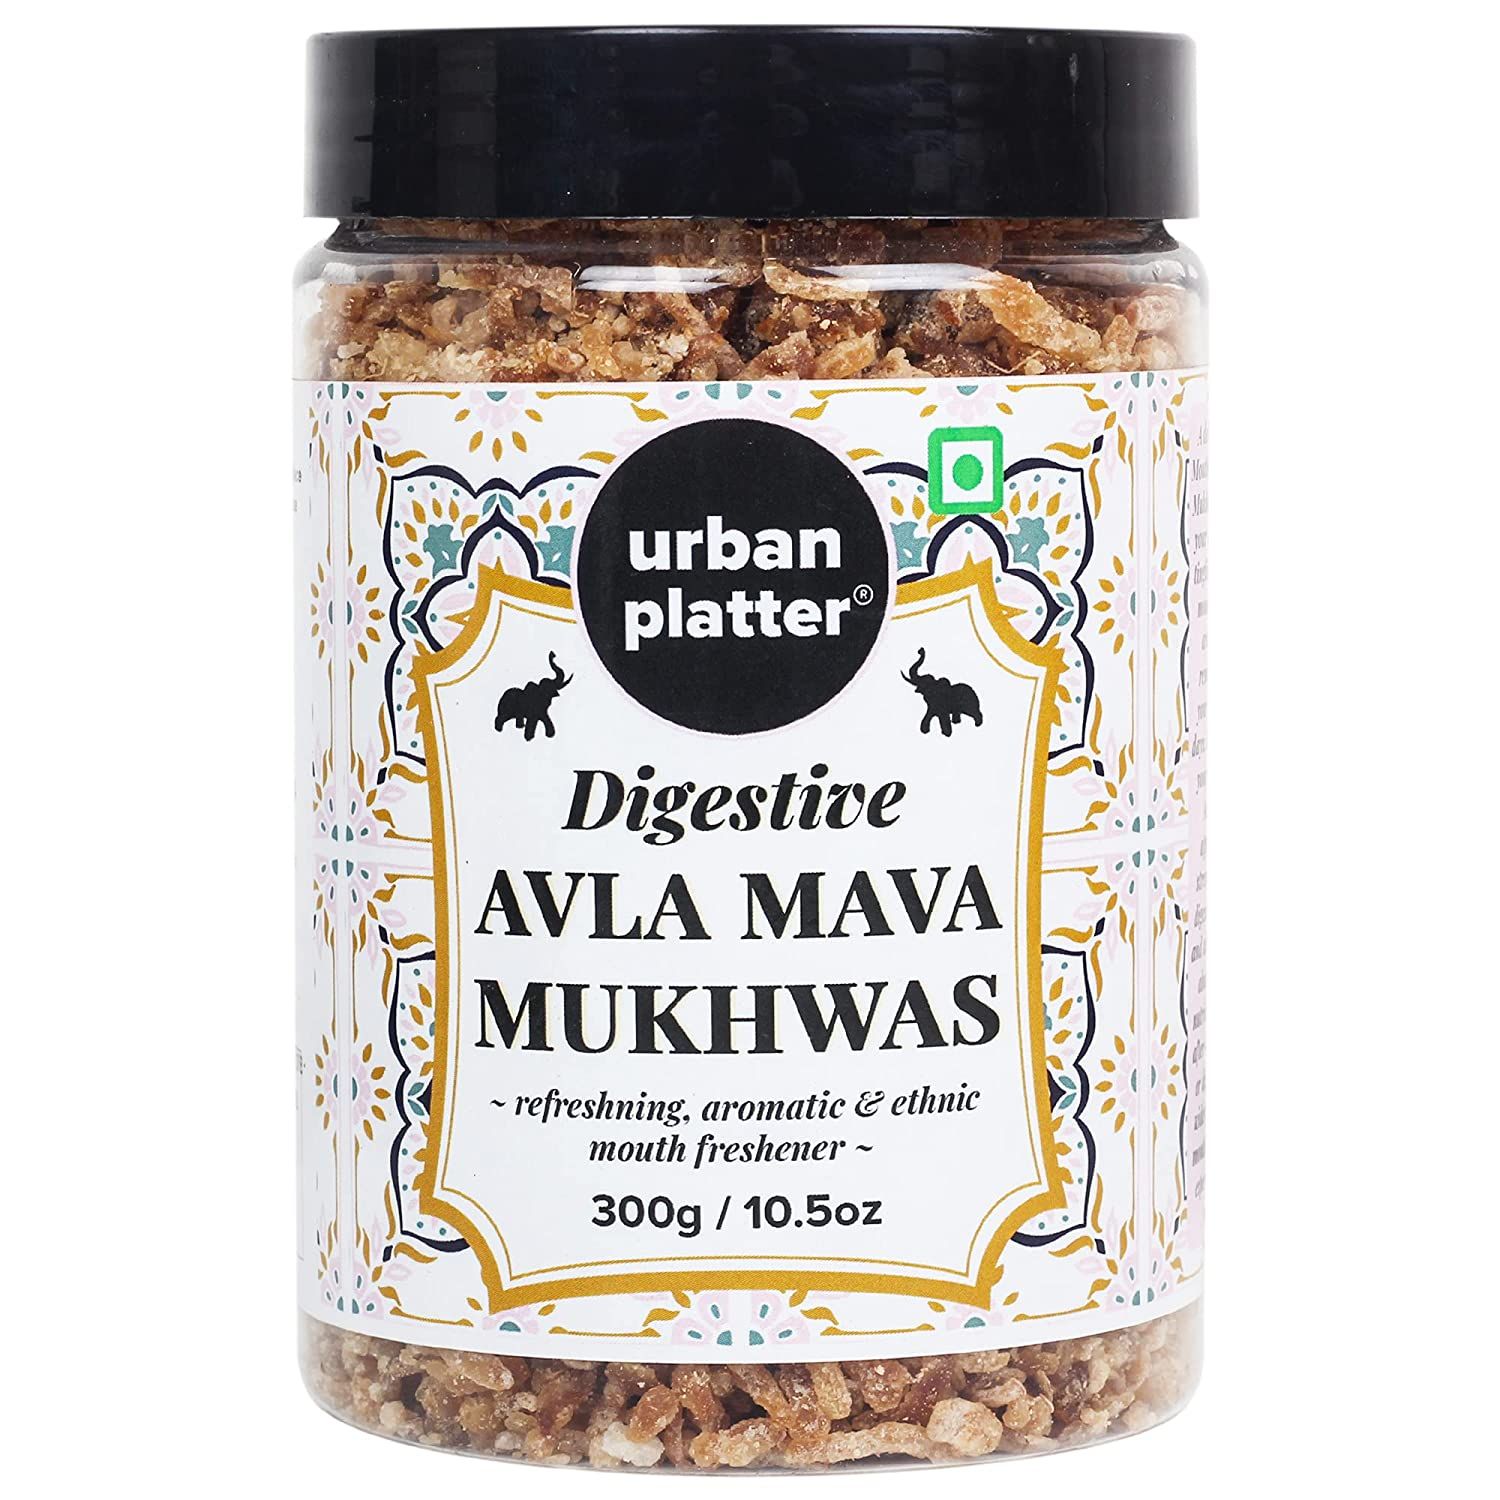 Urban Platter Digestive Avla Mava Muhwas Image